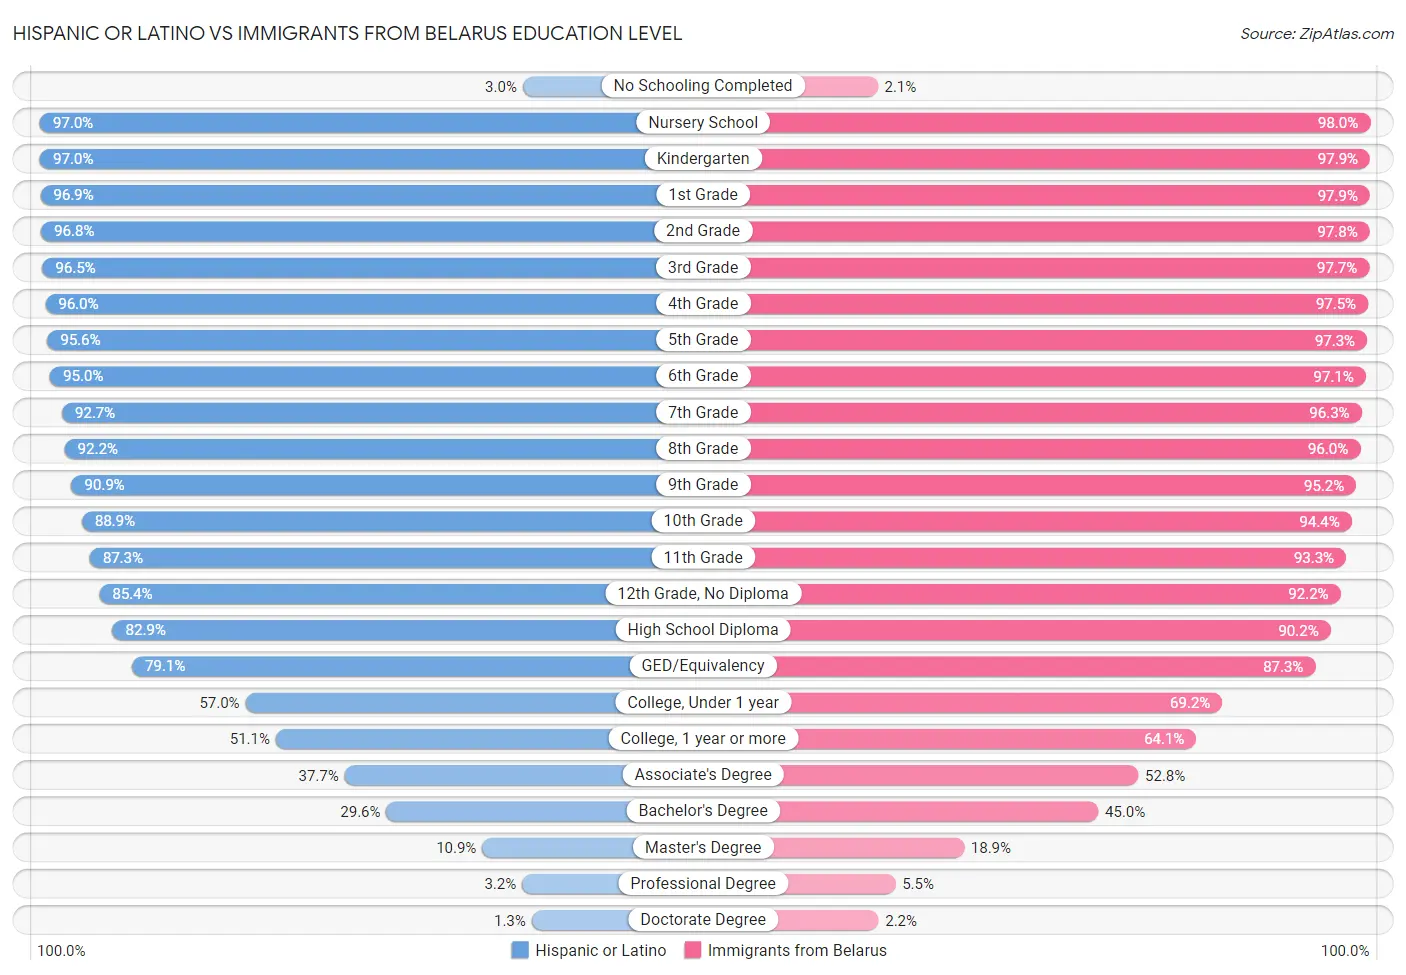 Hispanic or Latino vs Immigrants from Belarus Education Level